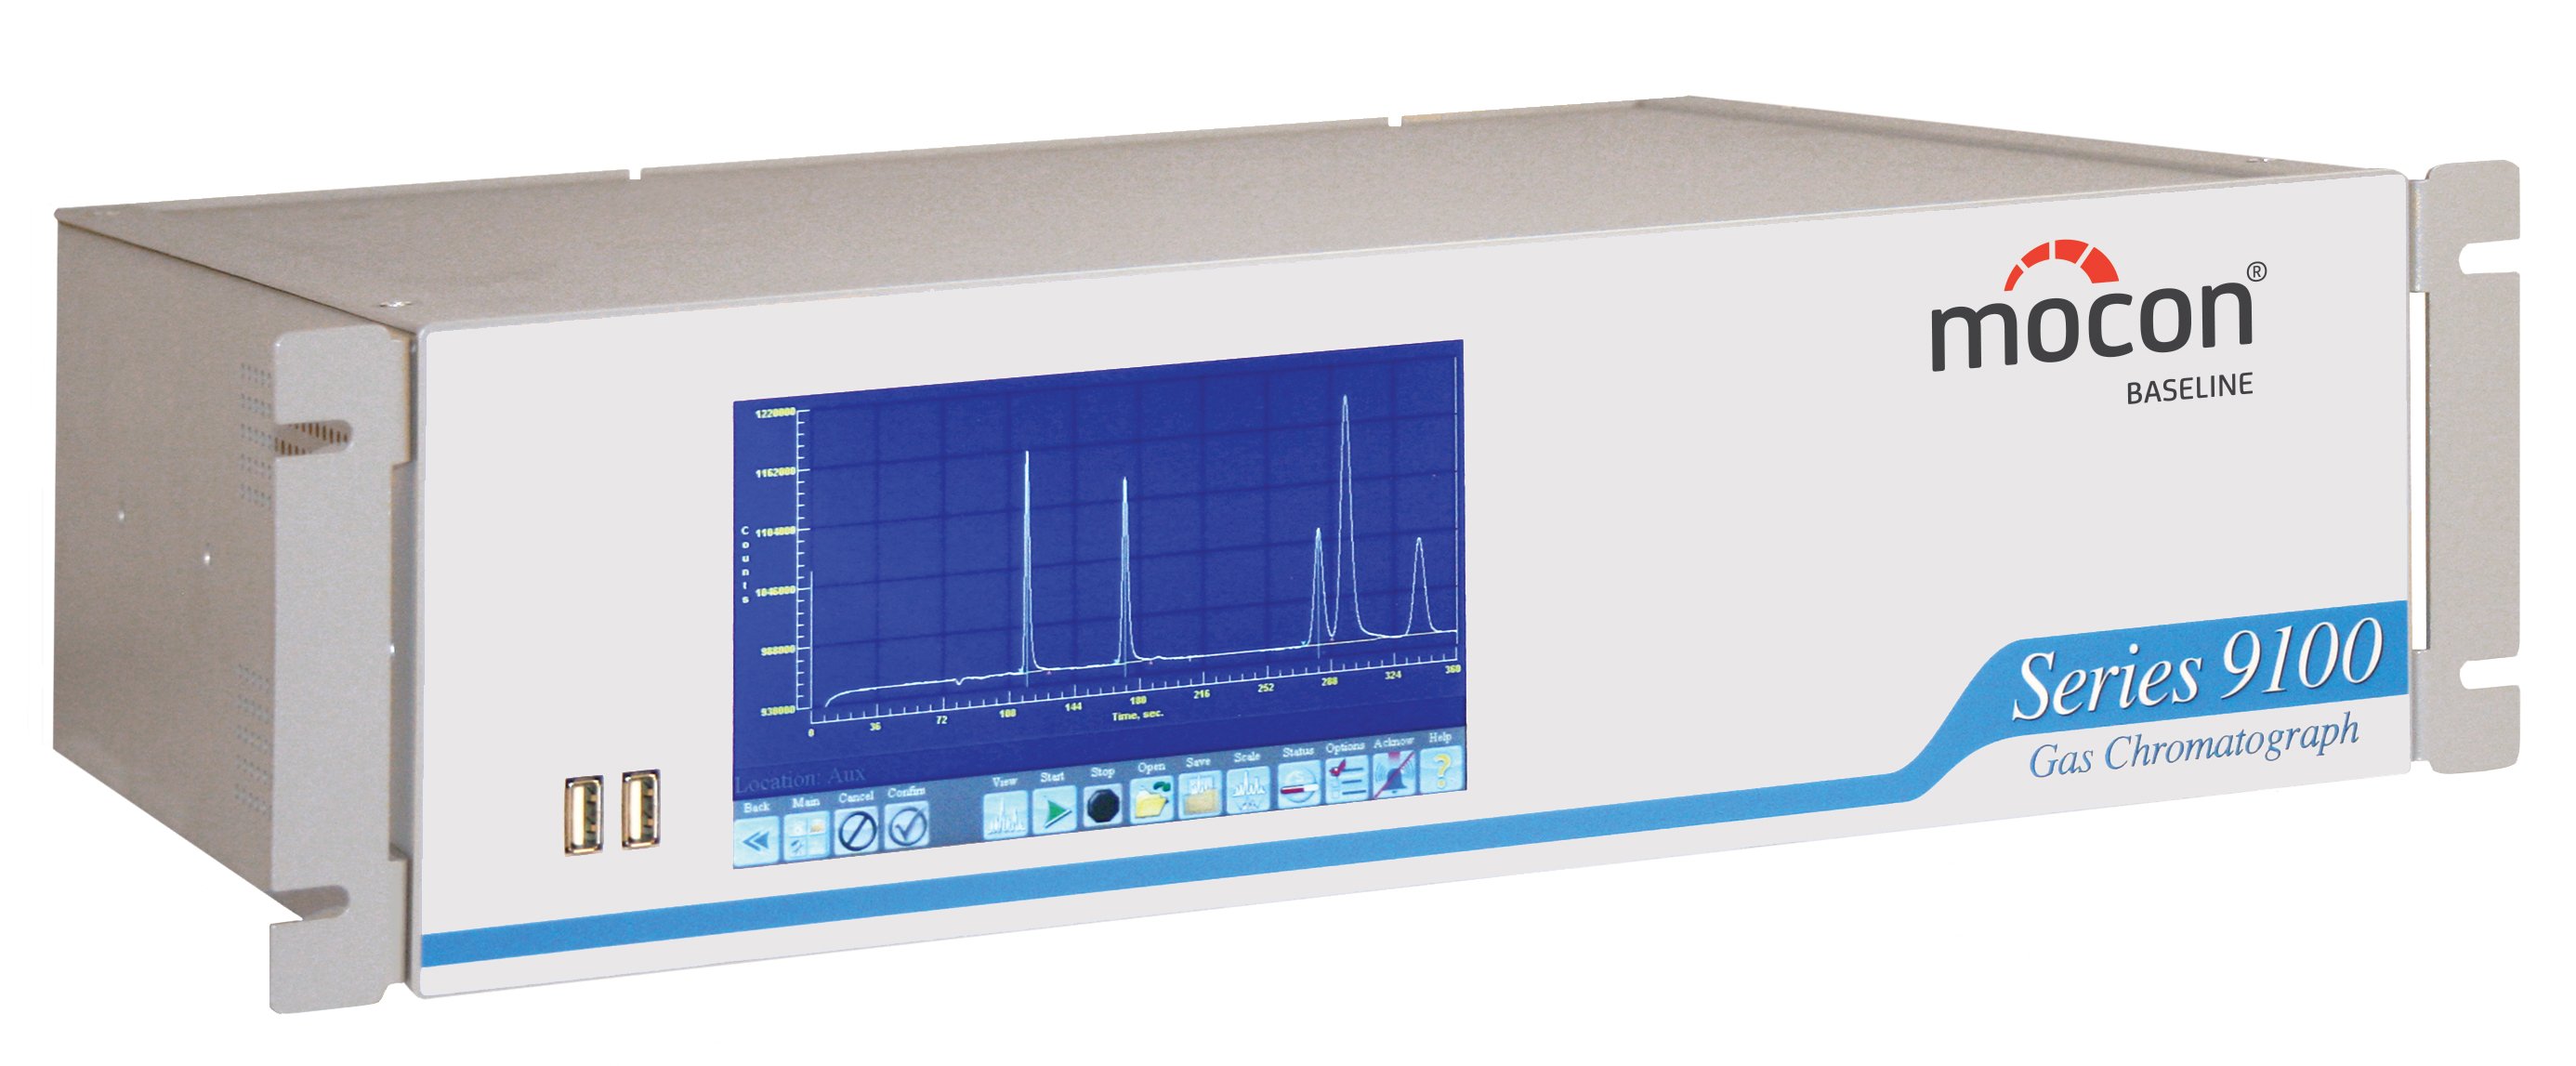 Series 9100 Gas Chromatograph